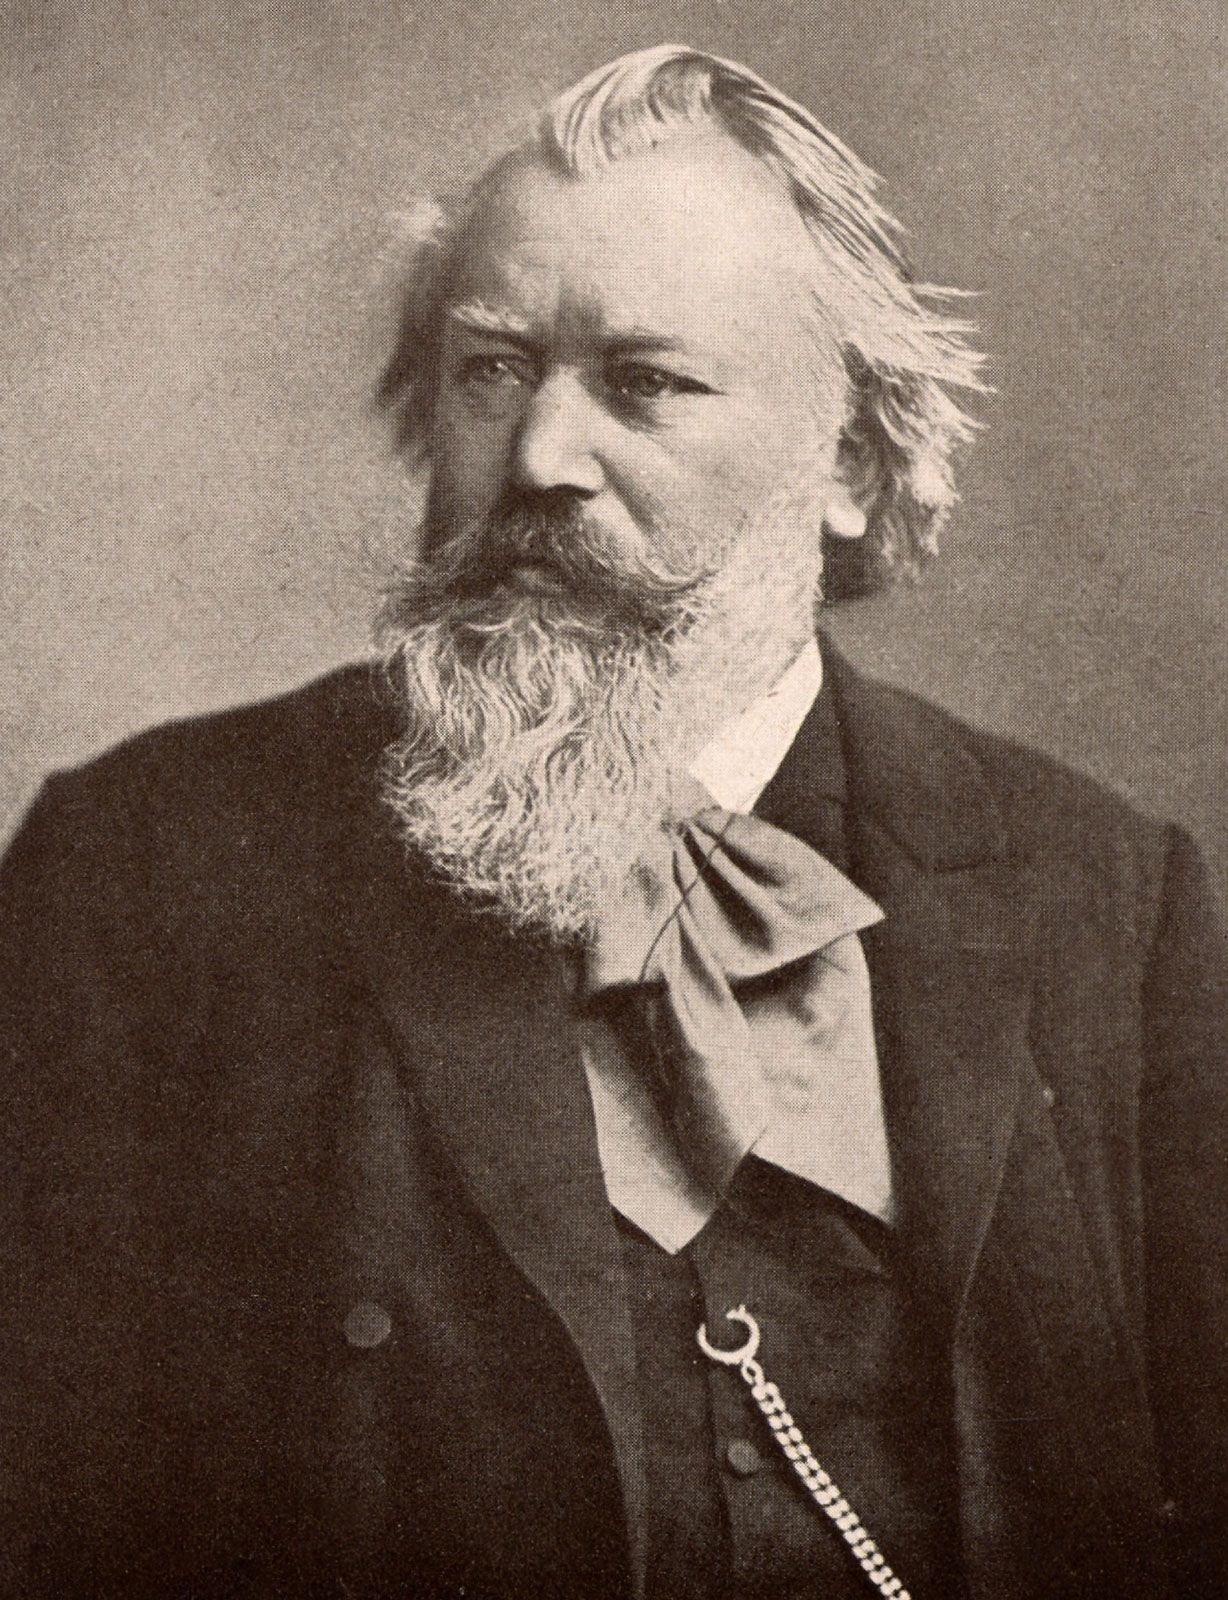  Biografie van Johannes Brahms